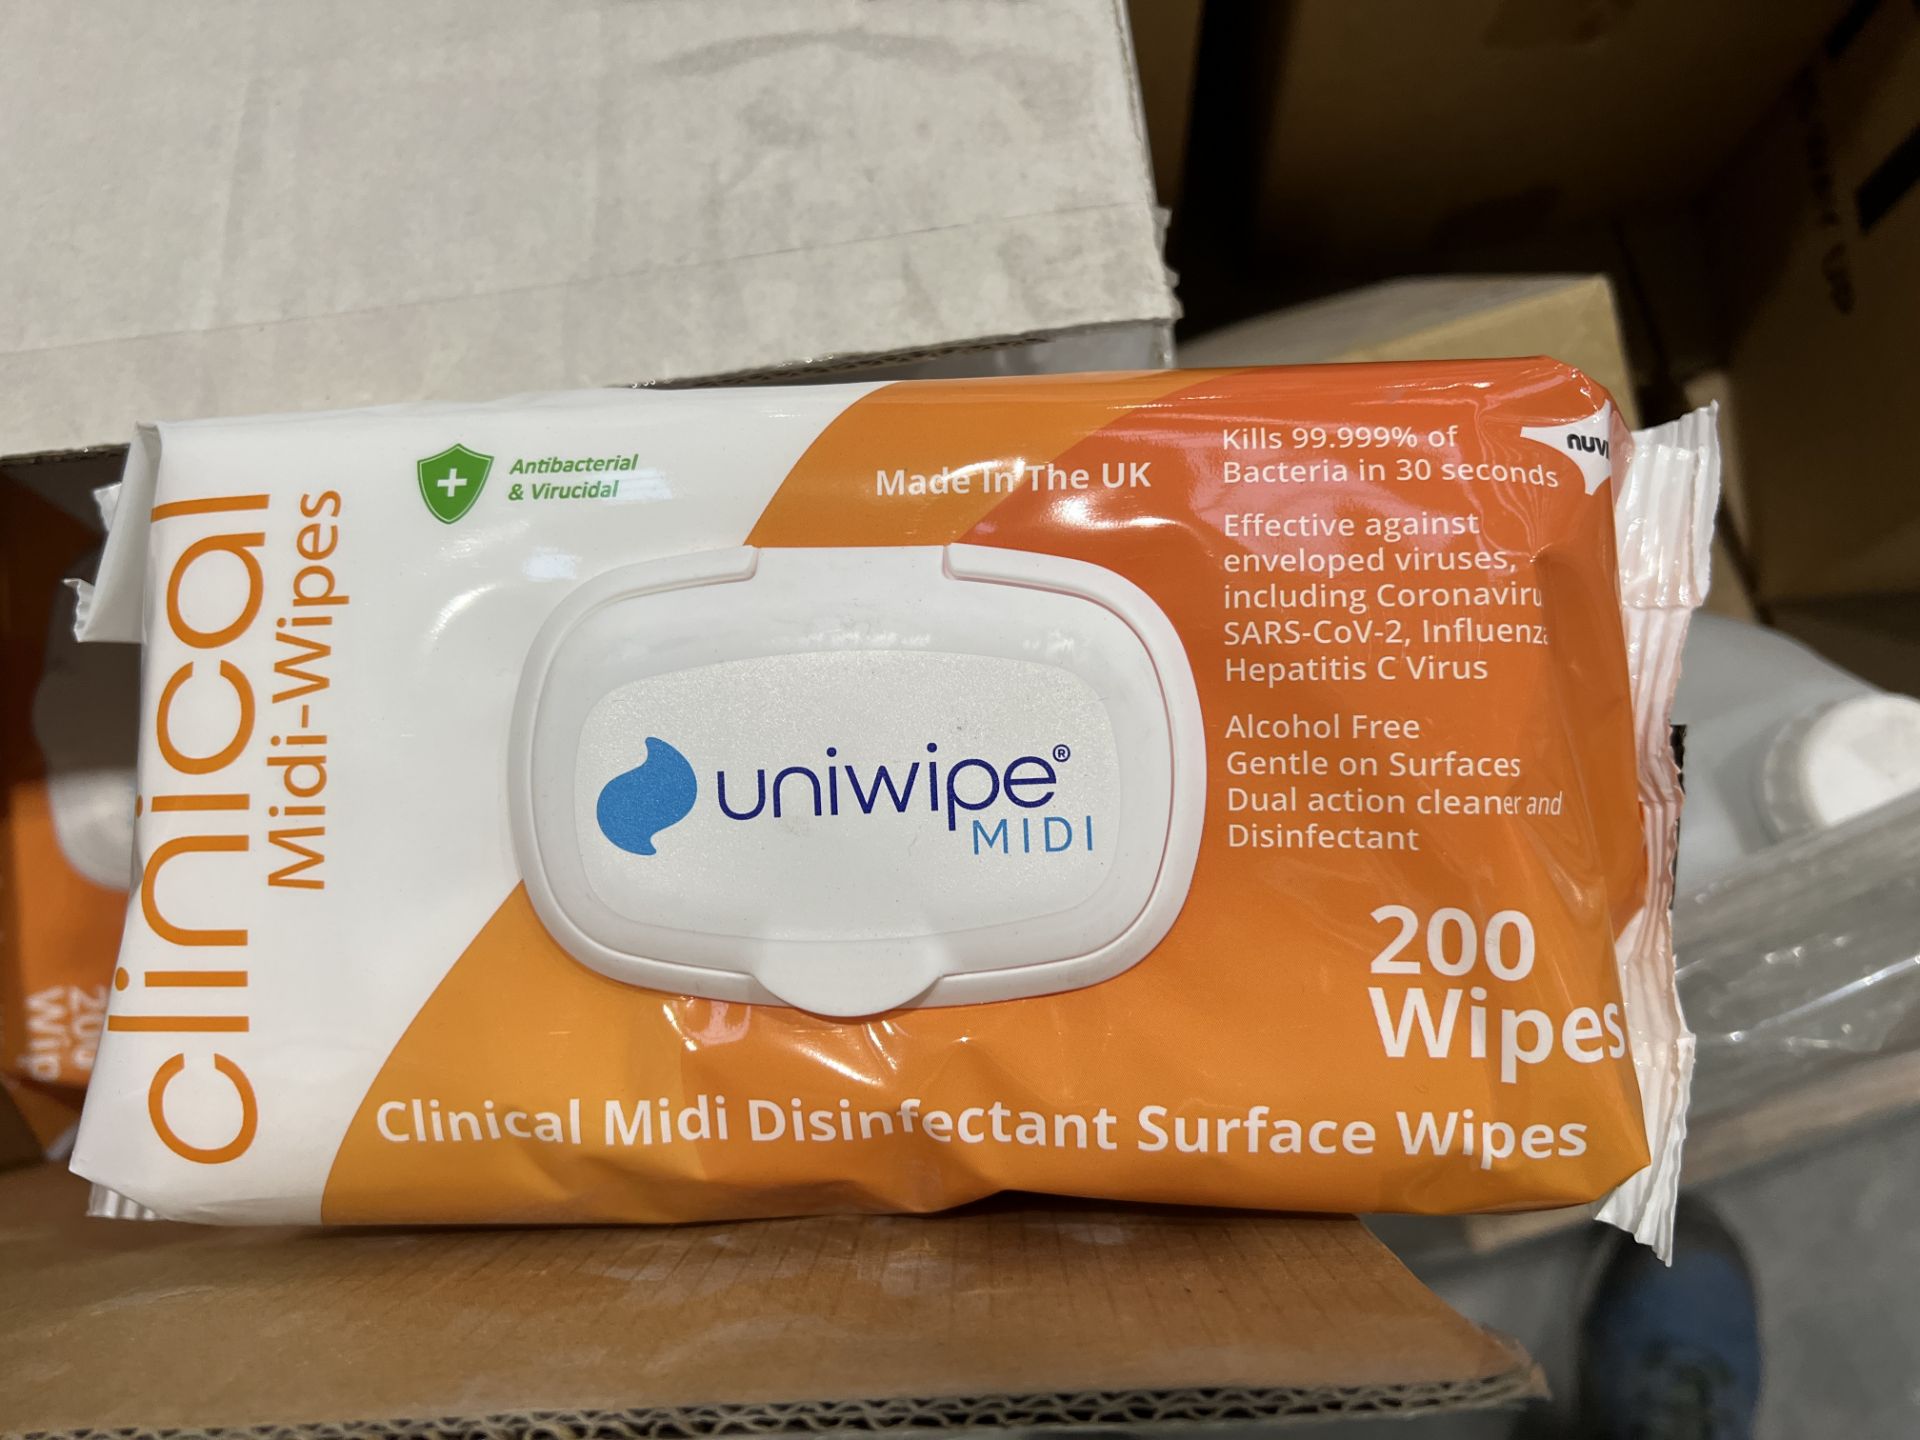 Qty 30 5 Ltr bottles of Ingen hand sanitiser gel, two par boxes of Uniwap clinical surface wipes and - Image 4 of 5